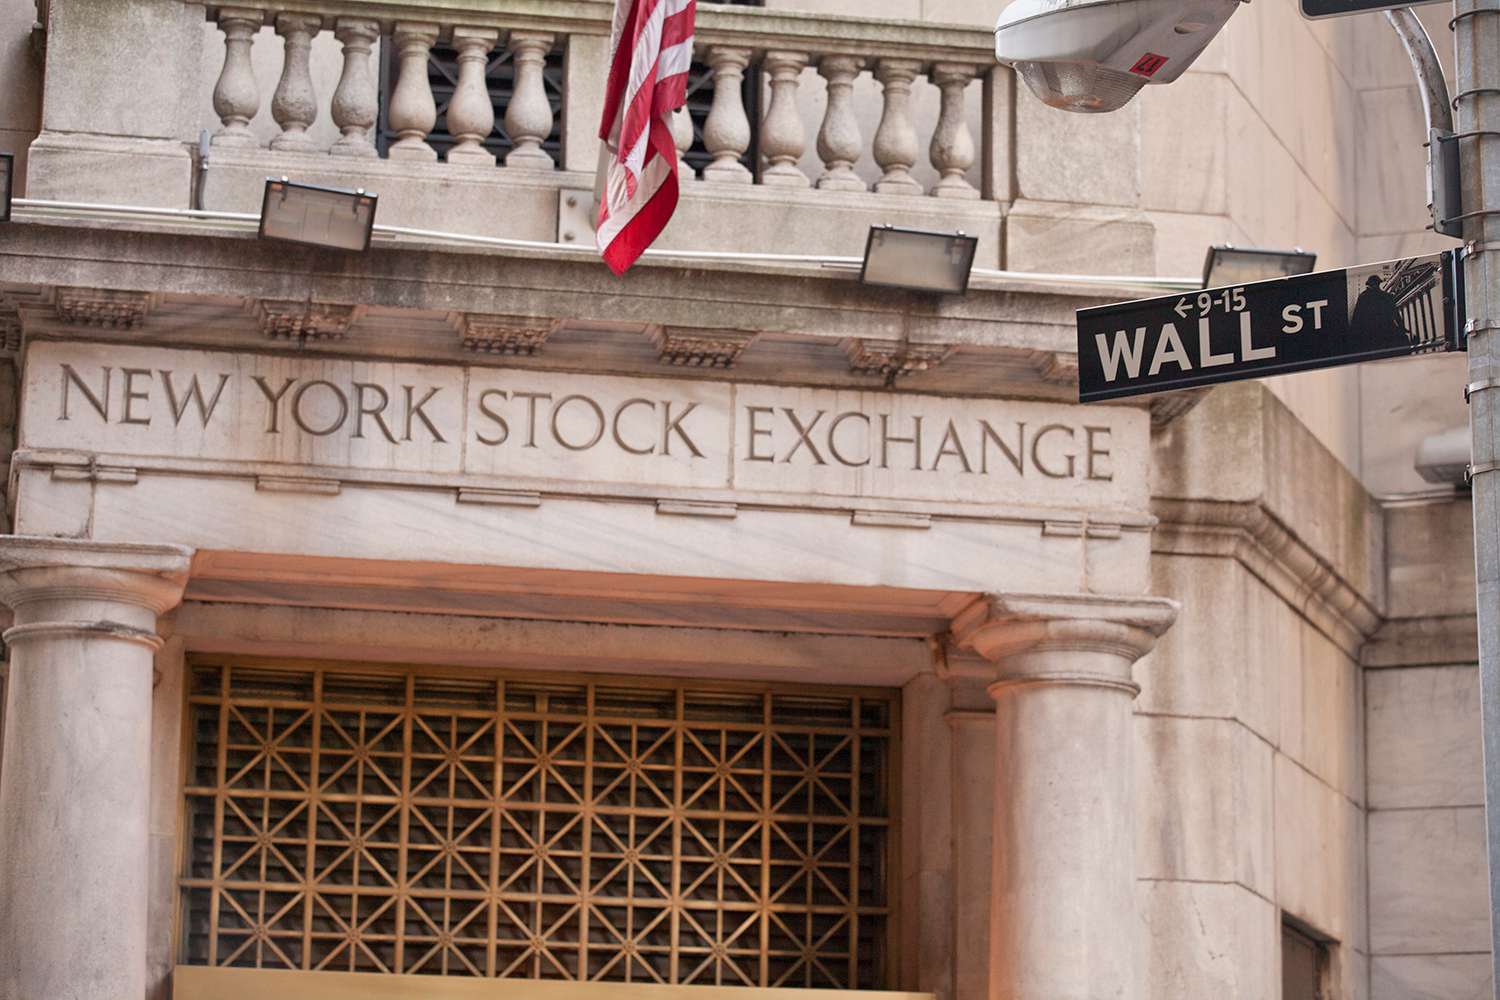 New York Stock Exchange Entrance at Wall Street Lower Manhattan